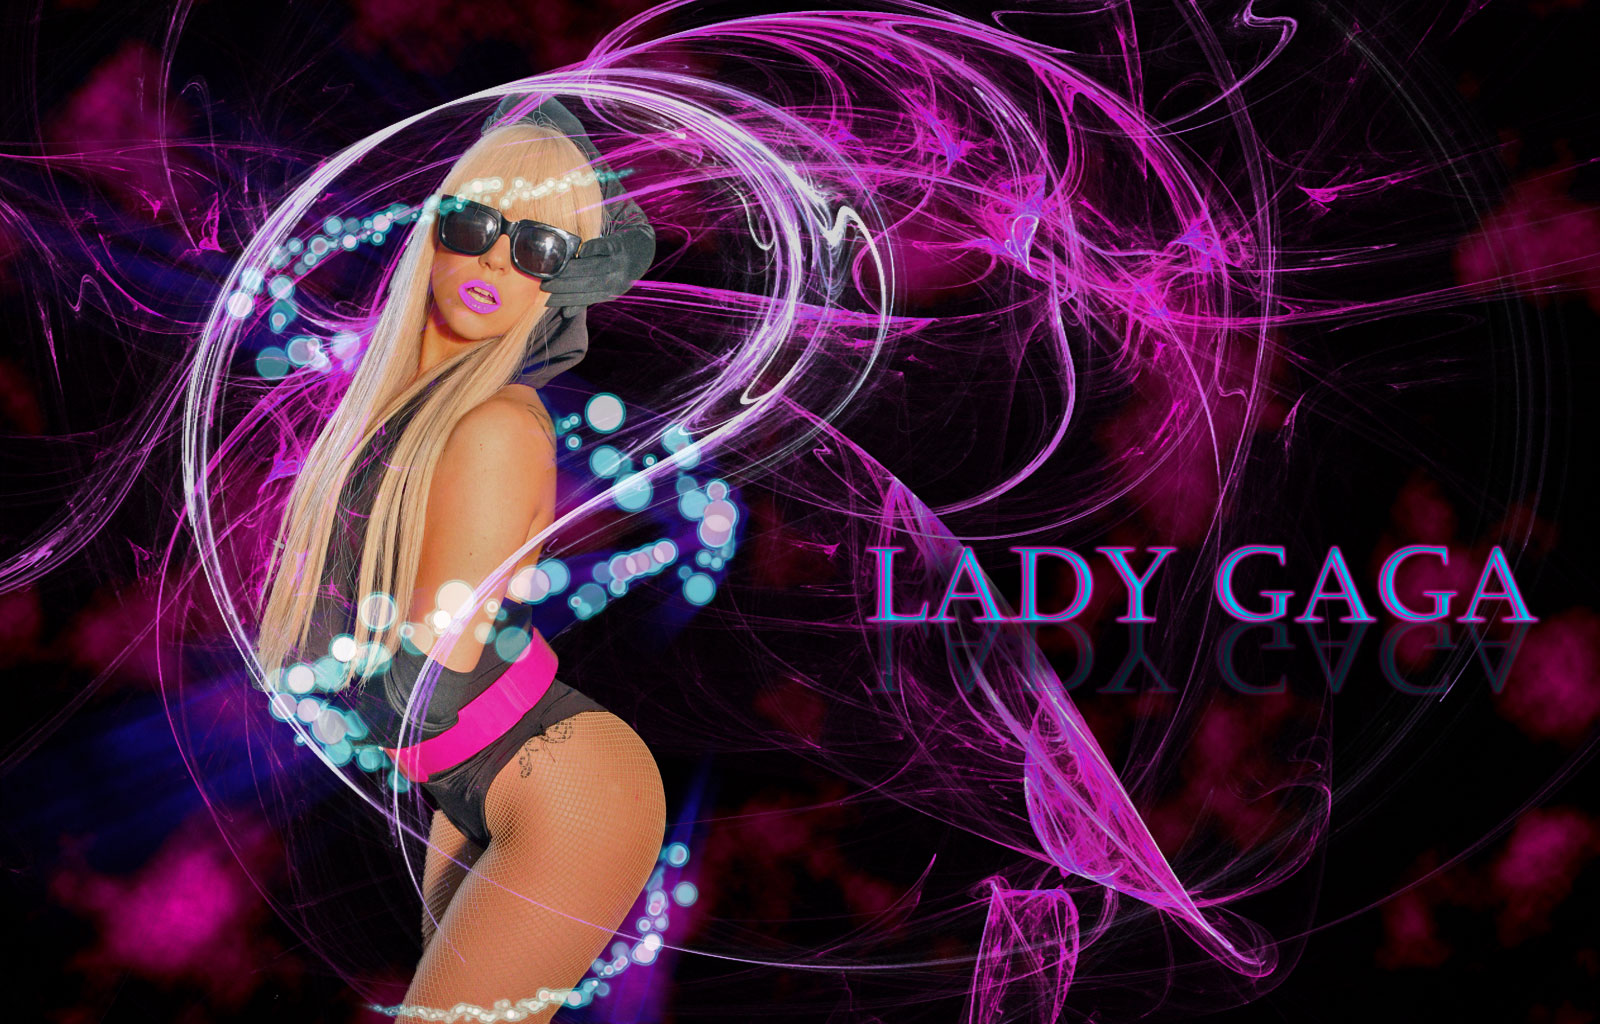 http://4.bp.blogspot.com/--OKzsOs9DZ4/Tv20LvWUiJI/AAAAAAAACv8/I6QWqRN4sGs/s1600/Lady+Gaga+18.jpg